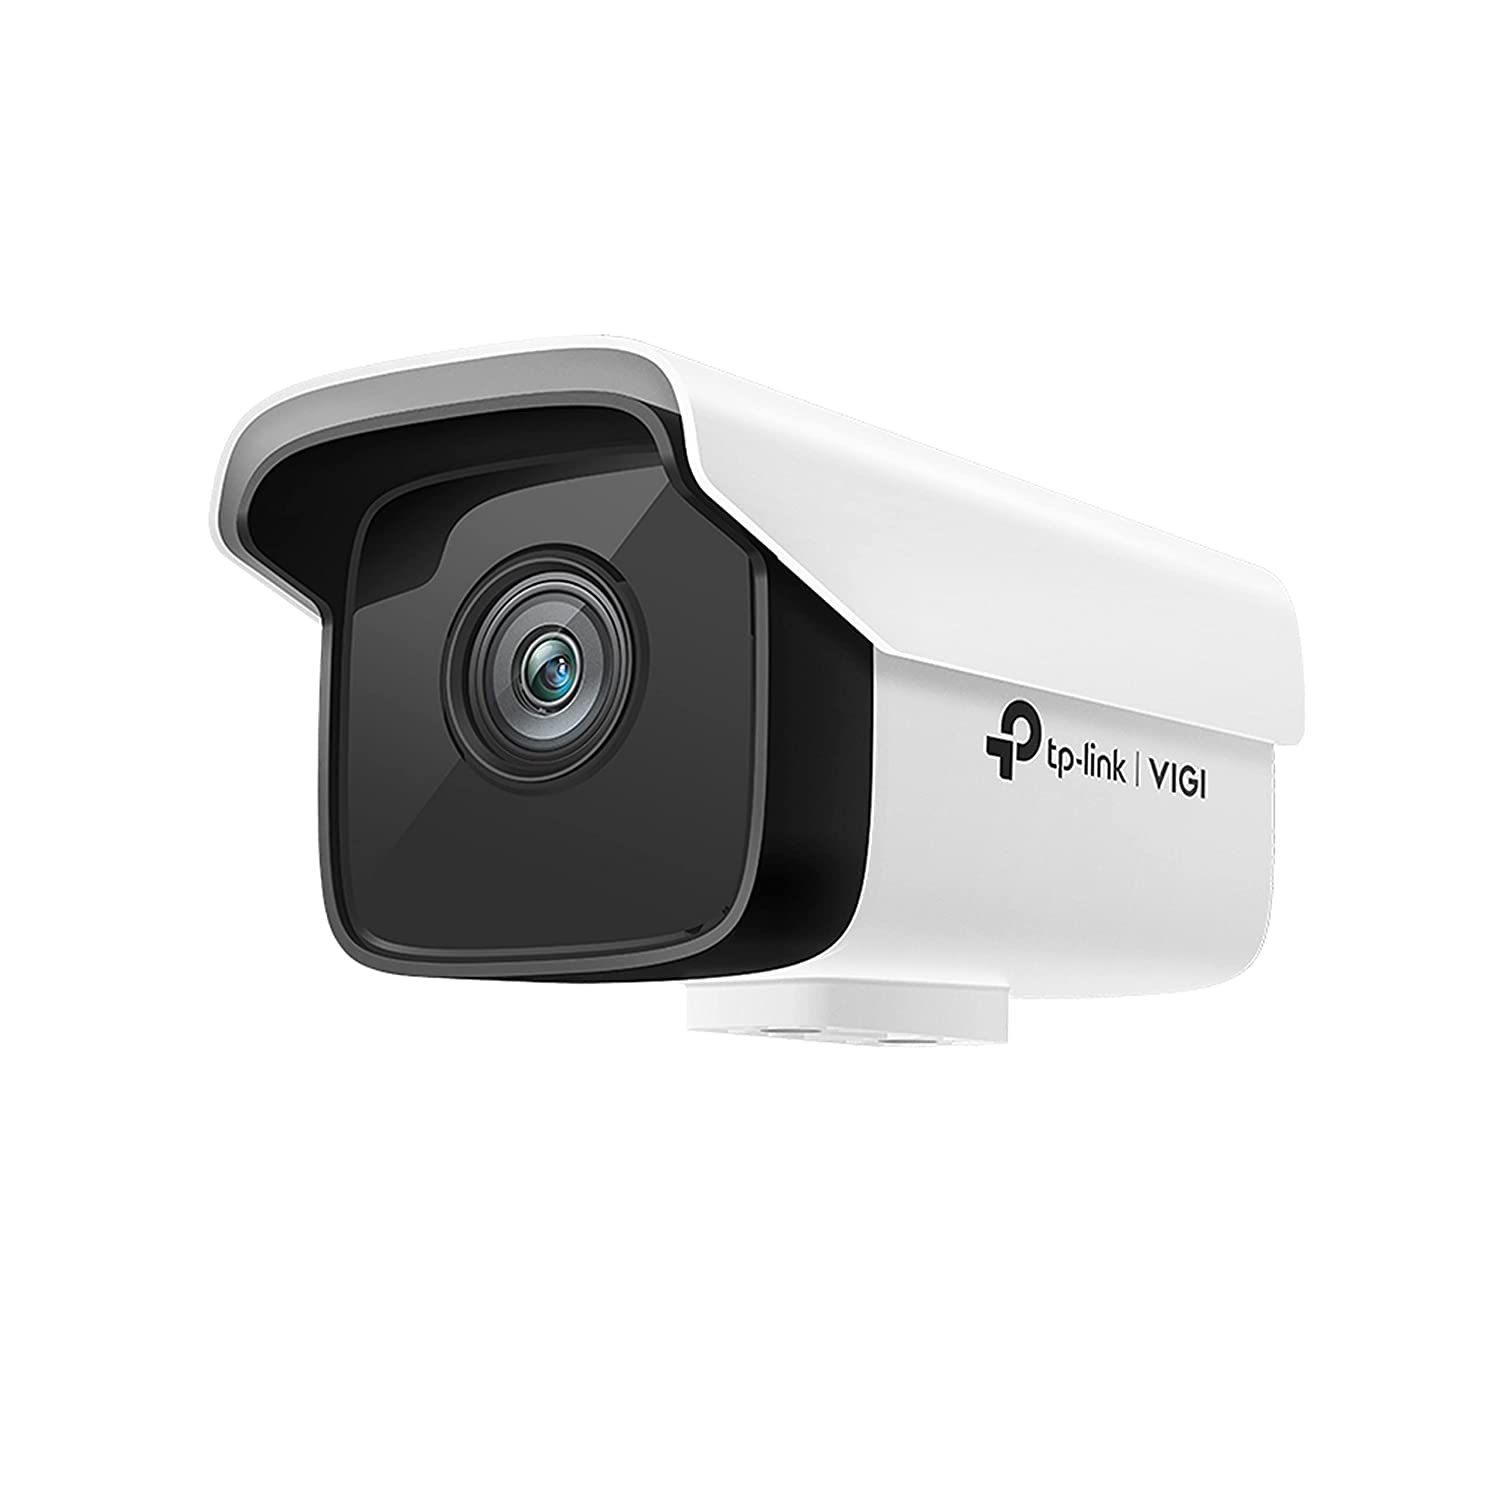 Open Box, Unused Tp-link Vigi C300hp 3mp Security Outdoor Bullet Network Camera